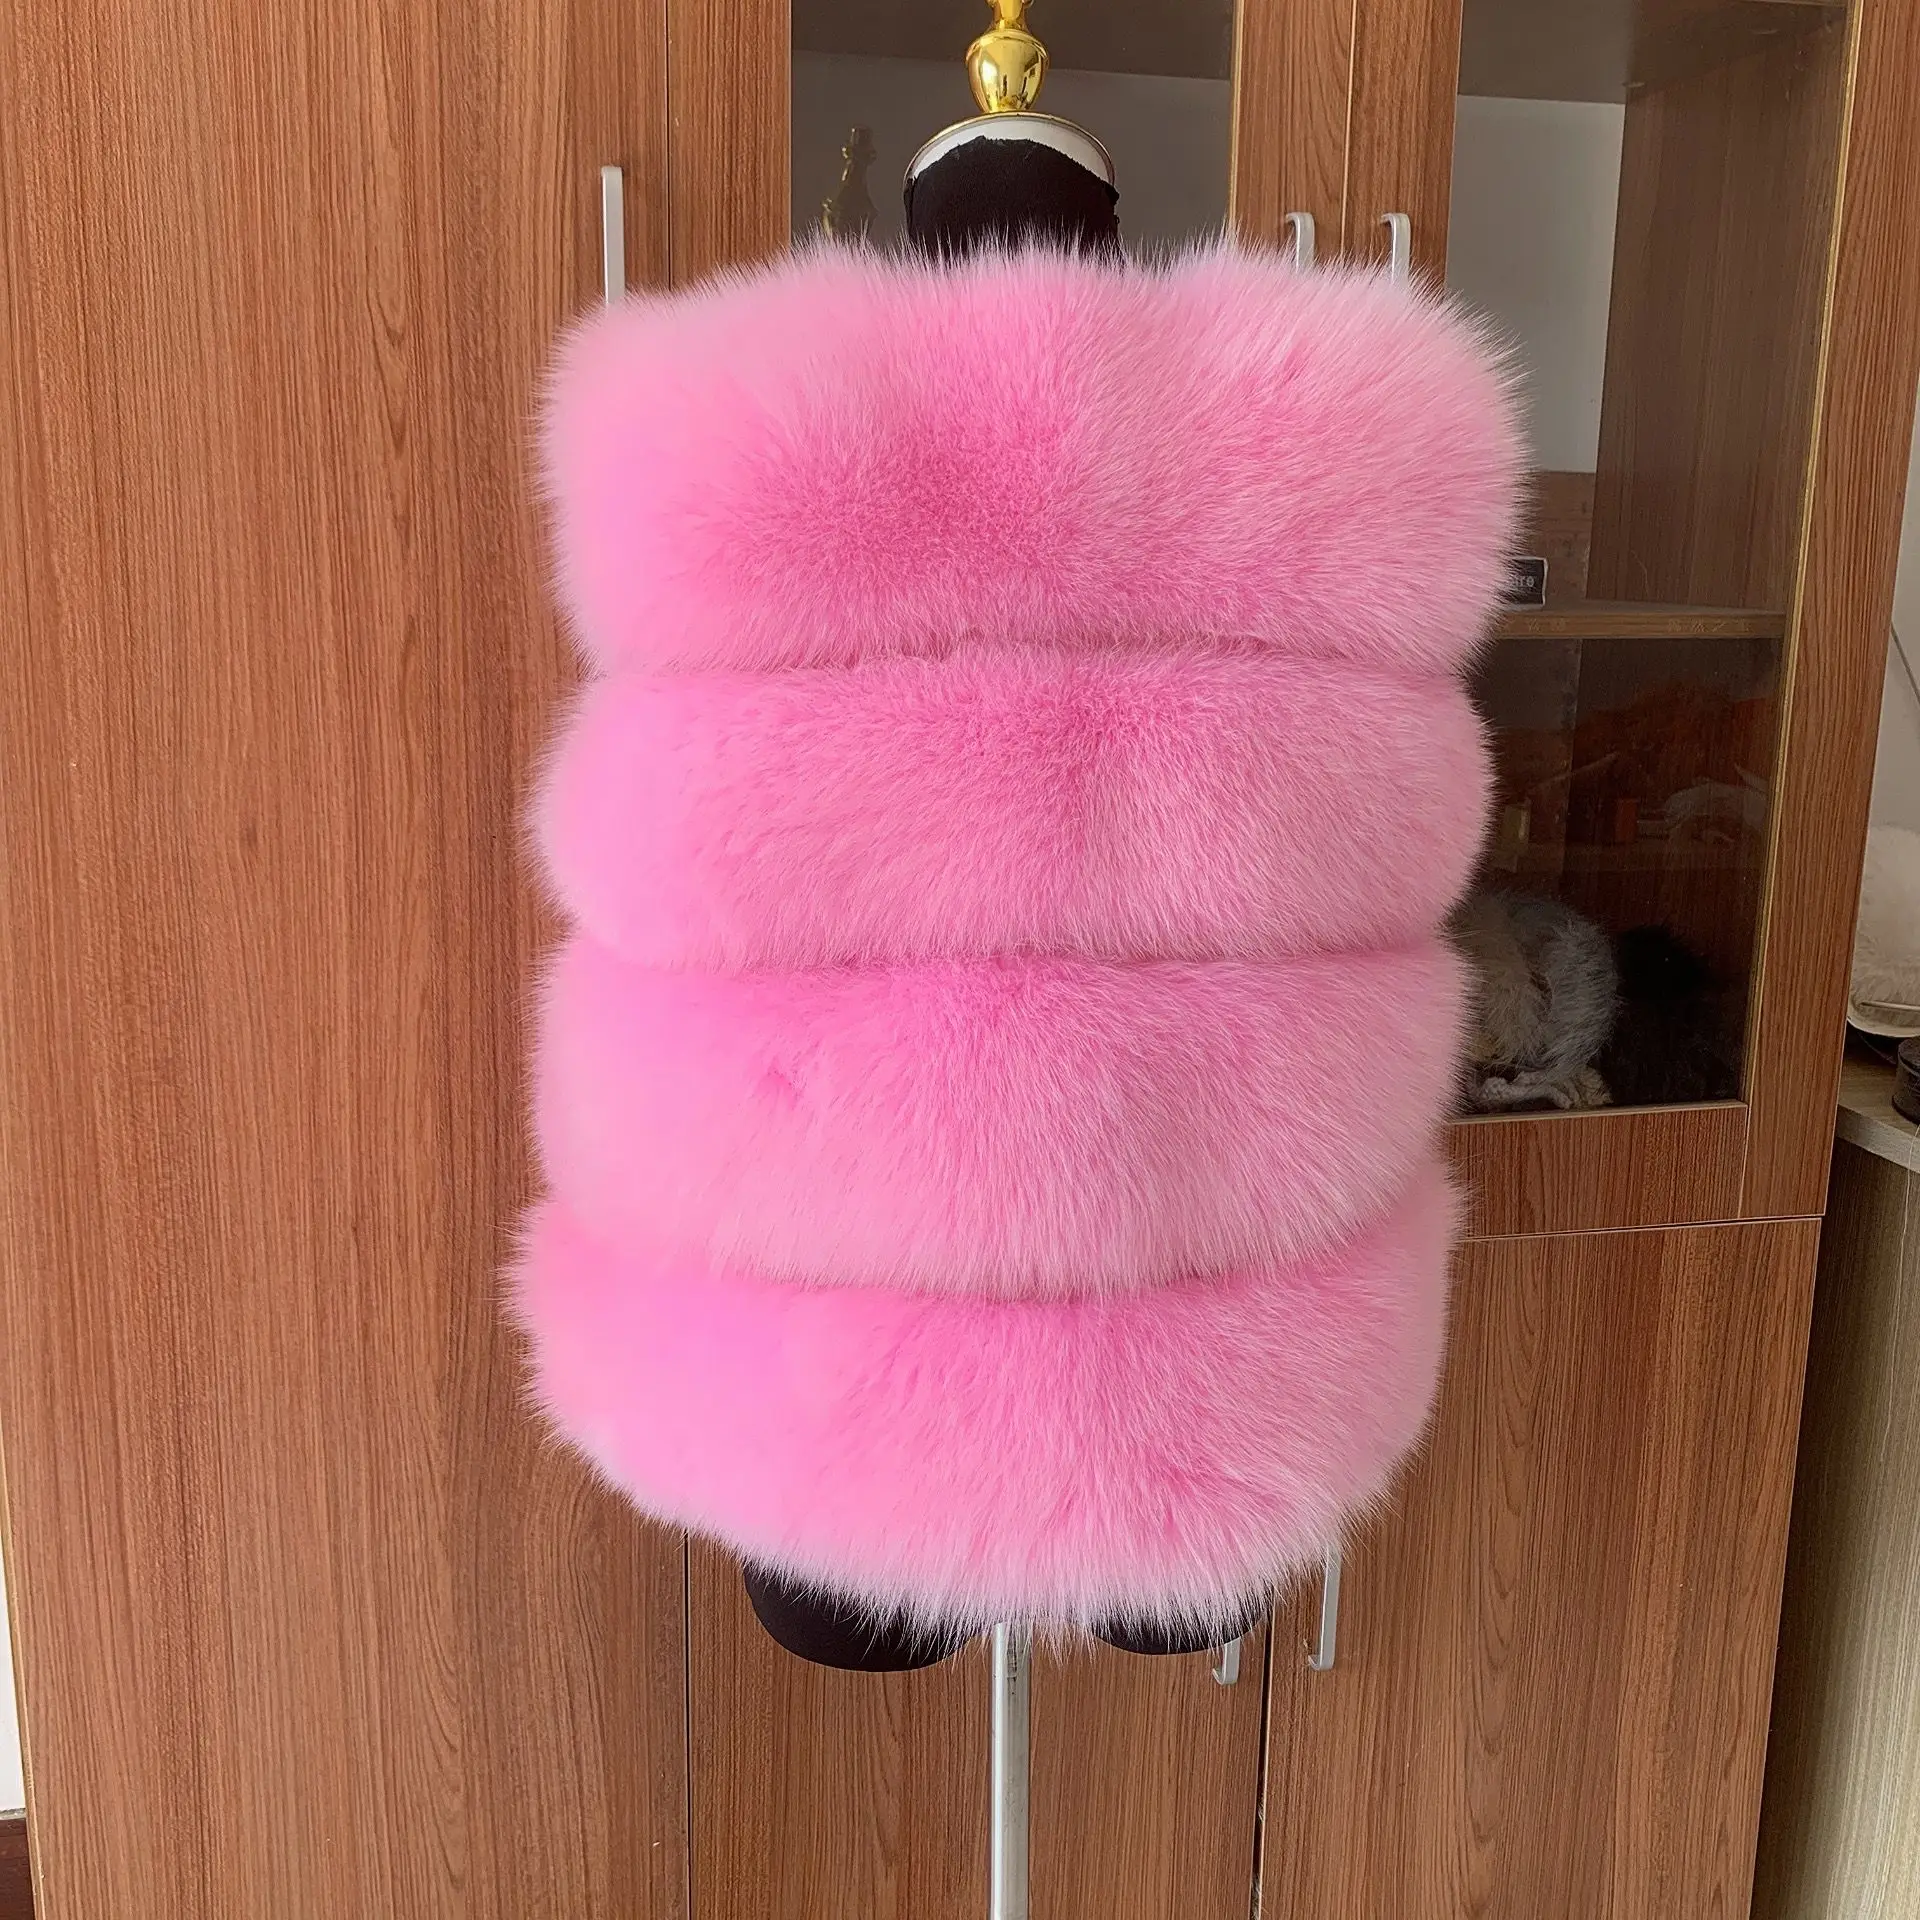 Natural genuine fox fur vest Pink popular real fur warm vest High quality women's autumn winter warm jacket Luxury fur coat enlarge